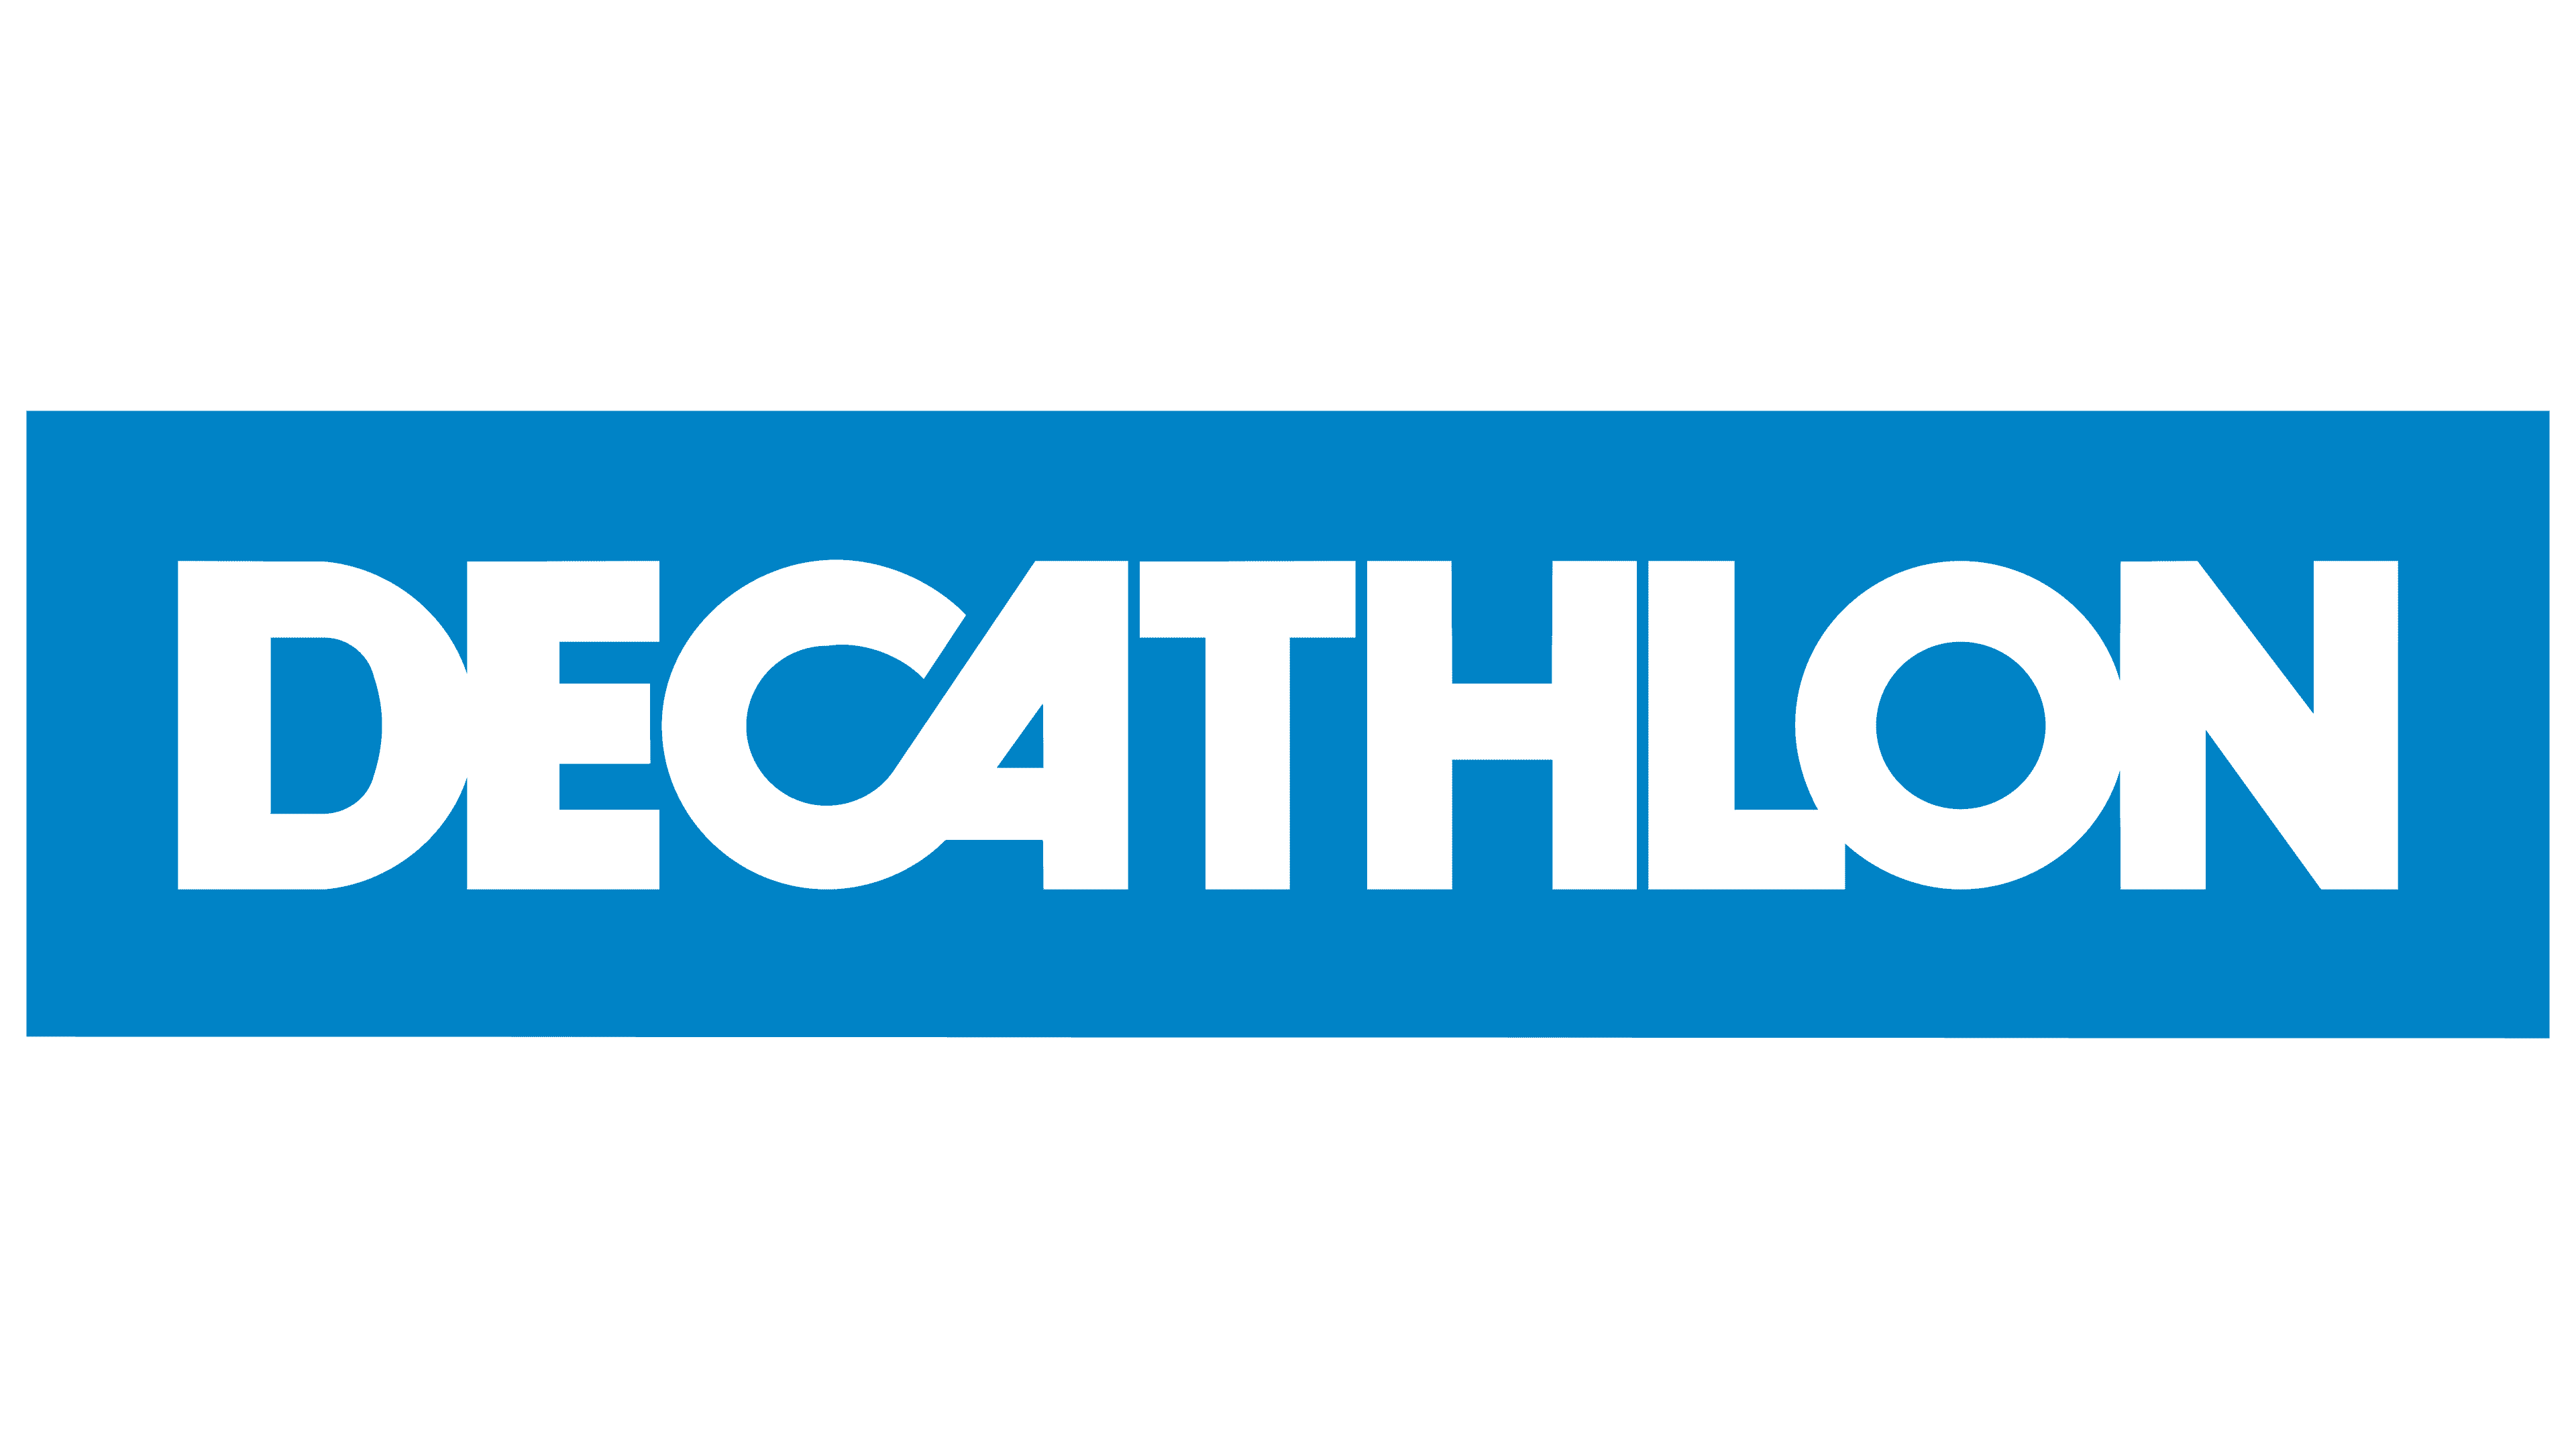 Decathlon logo